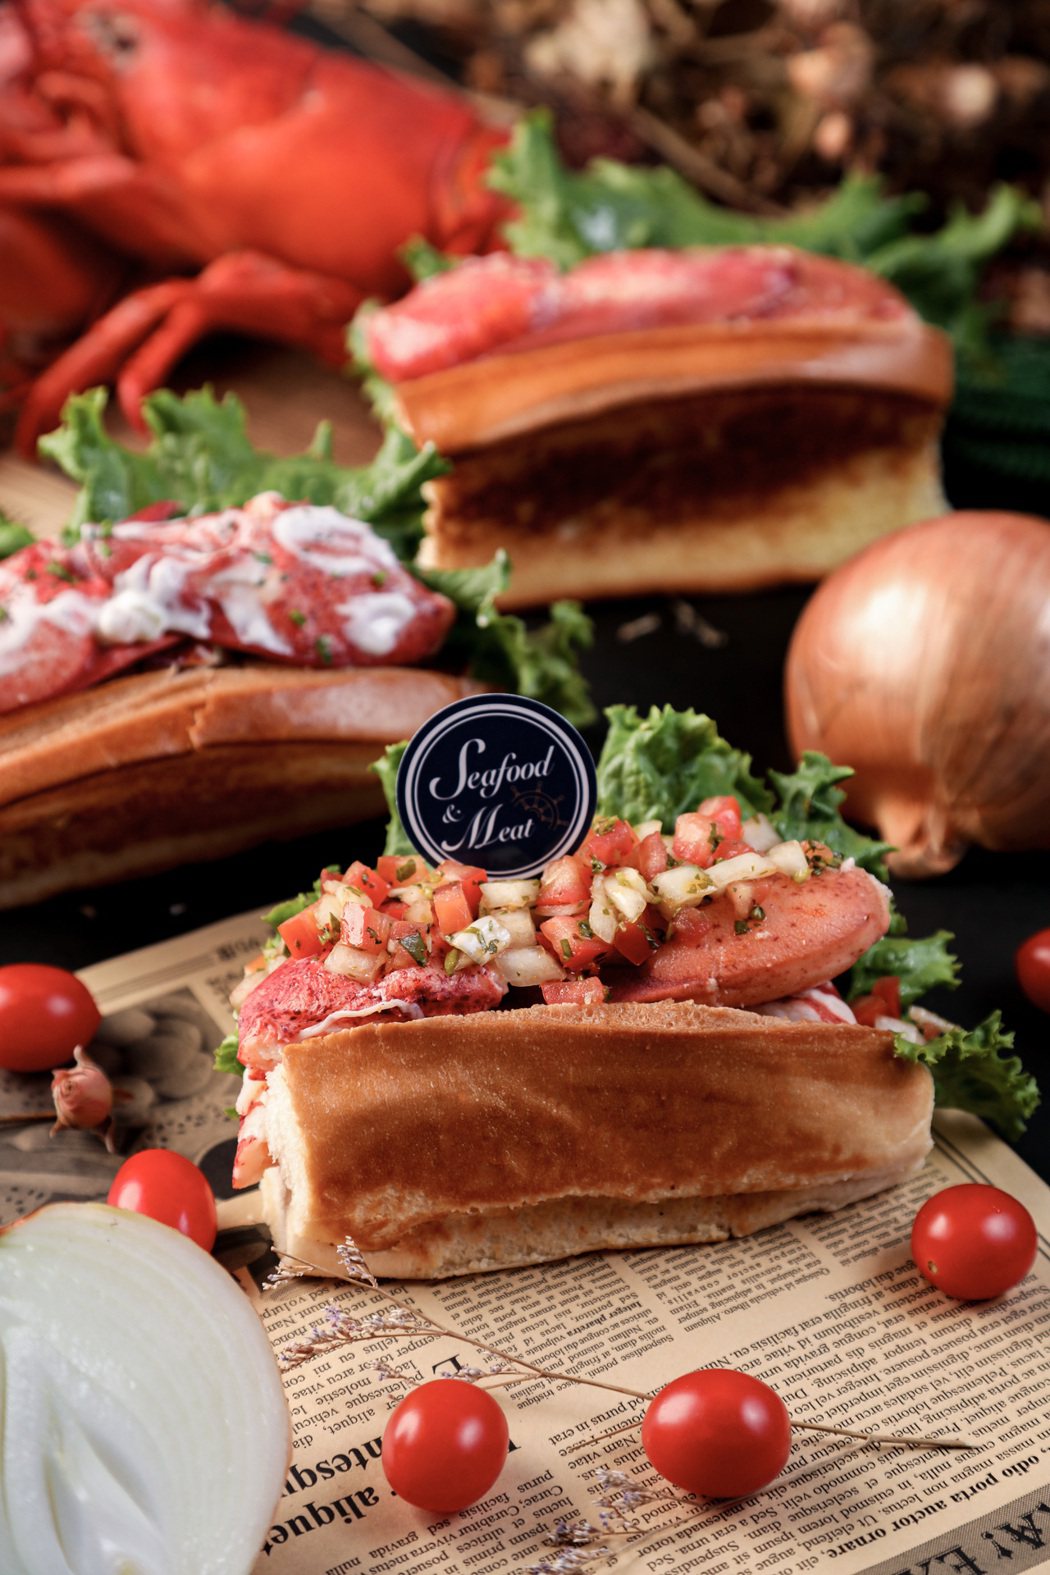 「Seafood & Meat波波海鮮市集」將在500趴現場提供三種口味龍蝦堡及...